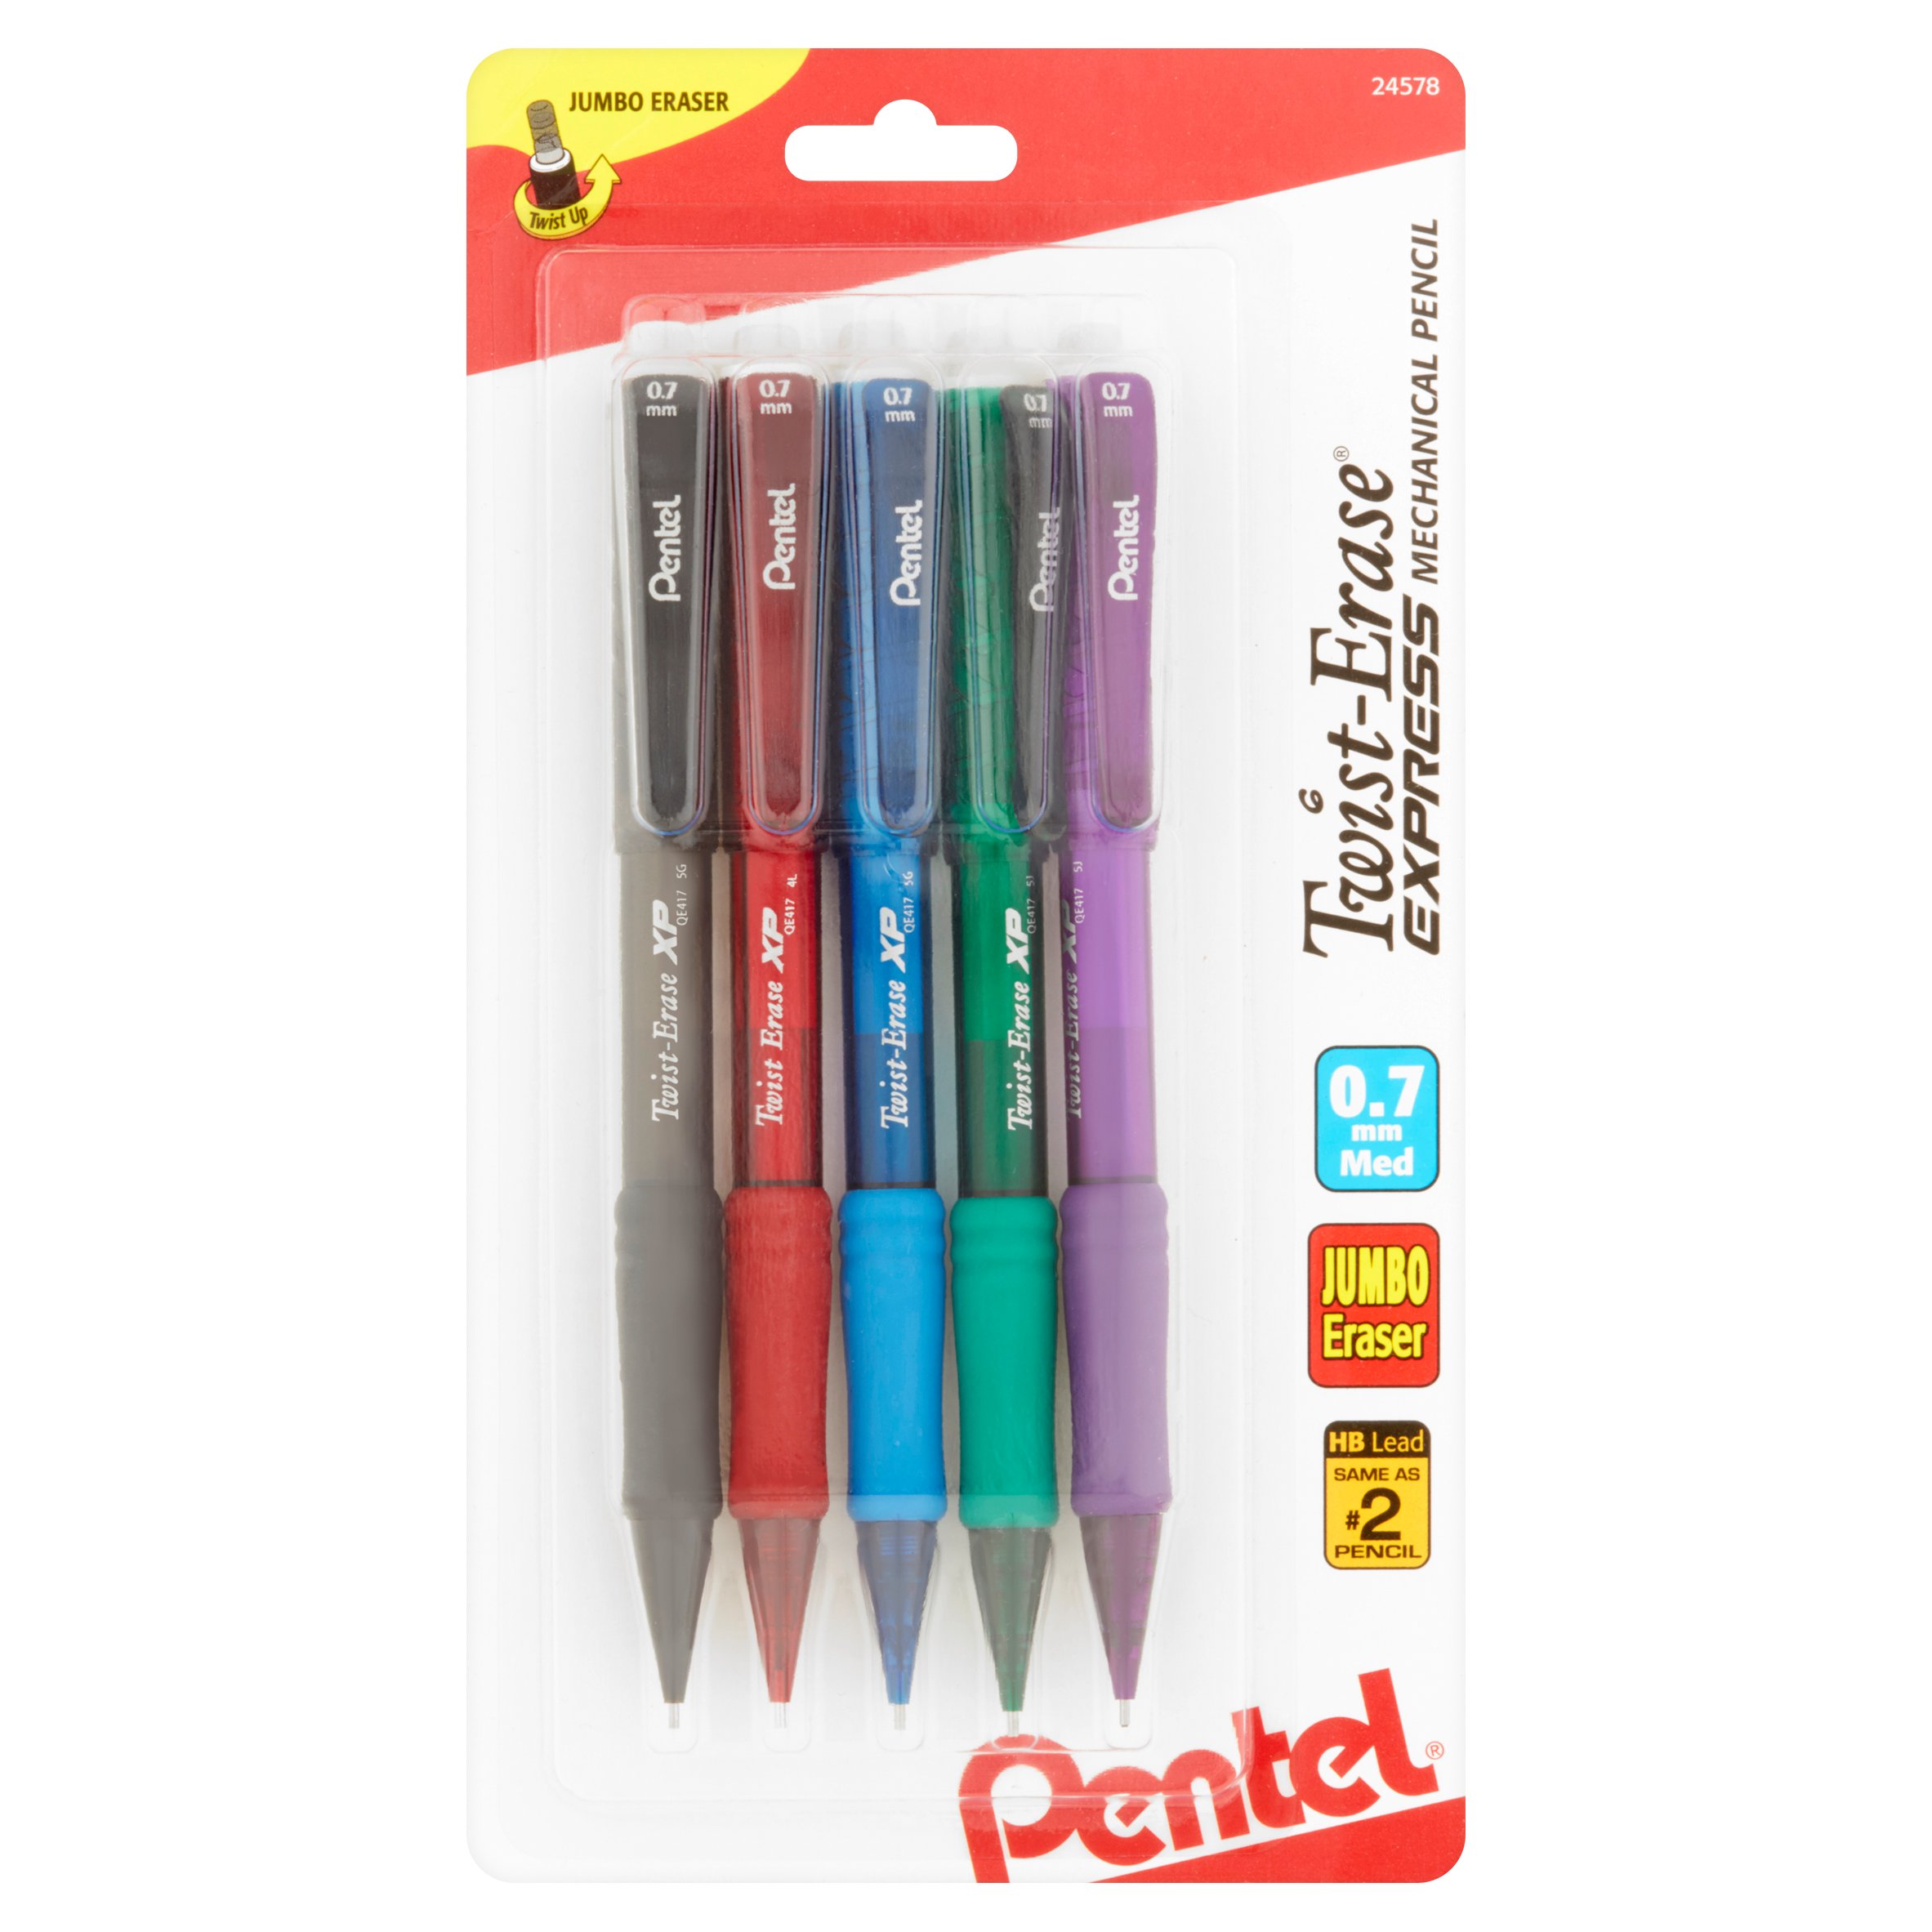 Pentel Twist-Erase EXPRESS Pencil (0.7mm) Asstd Barrel Colors, 5-Pk - image 1 of 6